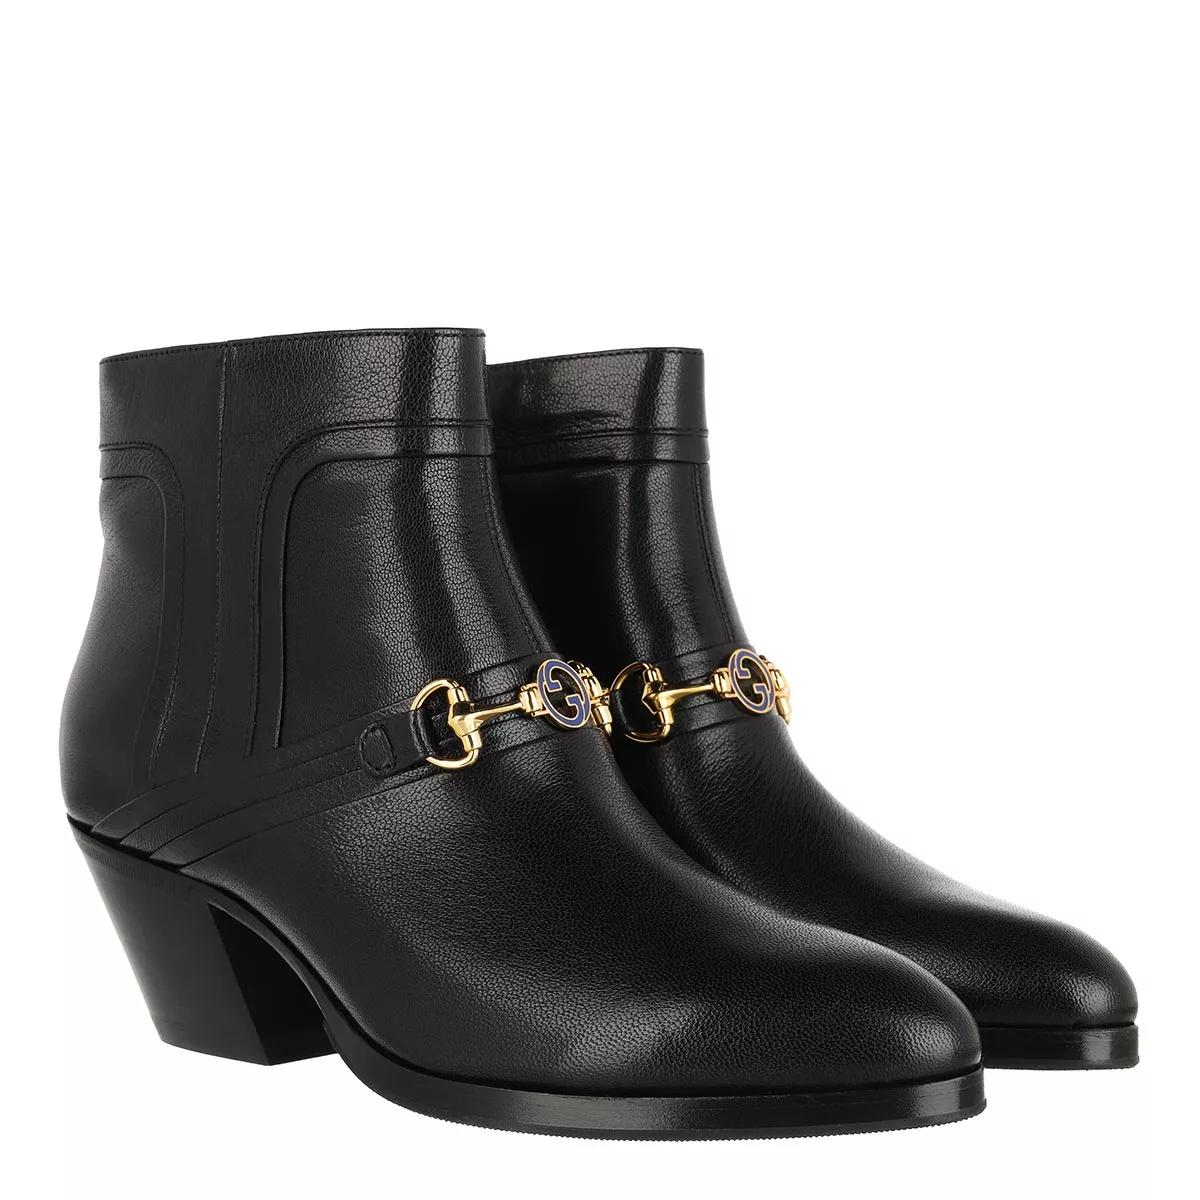 Gucci Horsebit Boots Black | Ankle Boot | fashionette